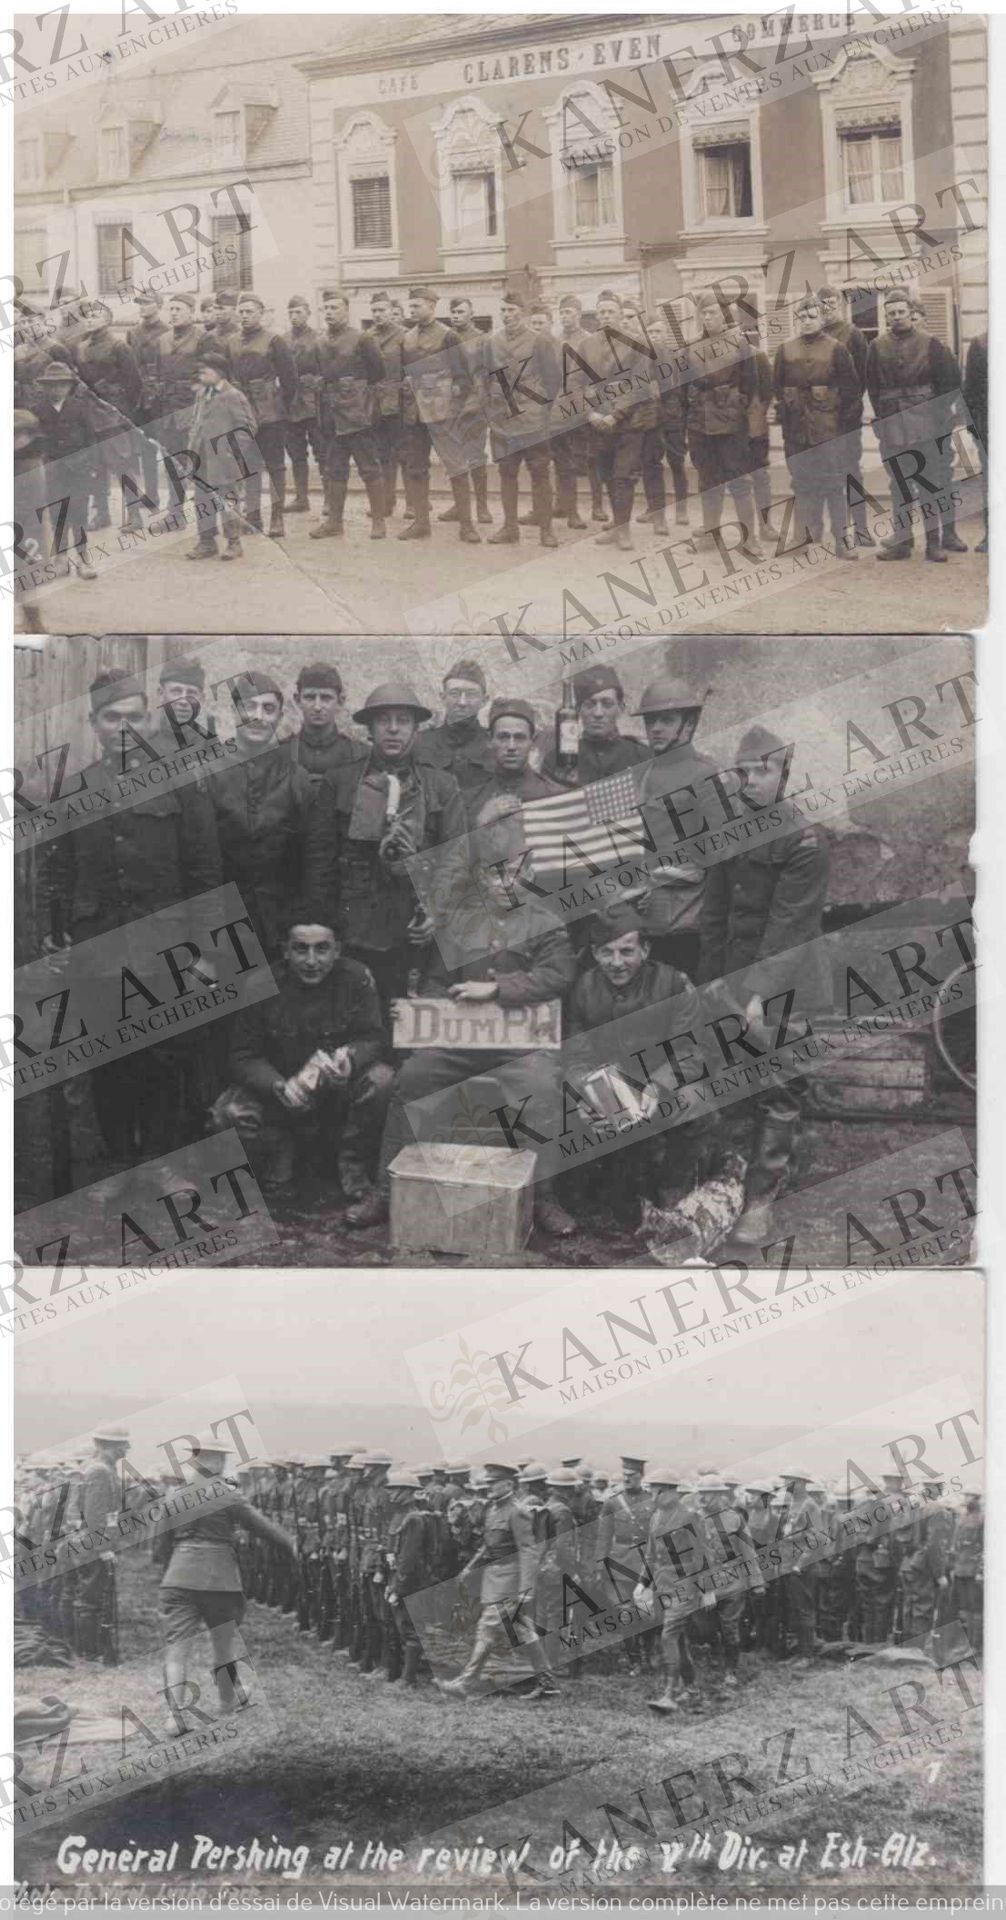 Null (WAR I) 3 Karten der US-Armee: 1. Fotokarte vor dem Café Clarens-Even, ca. &hellip;